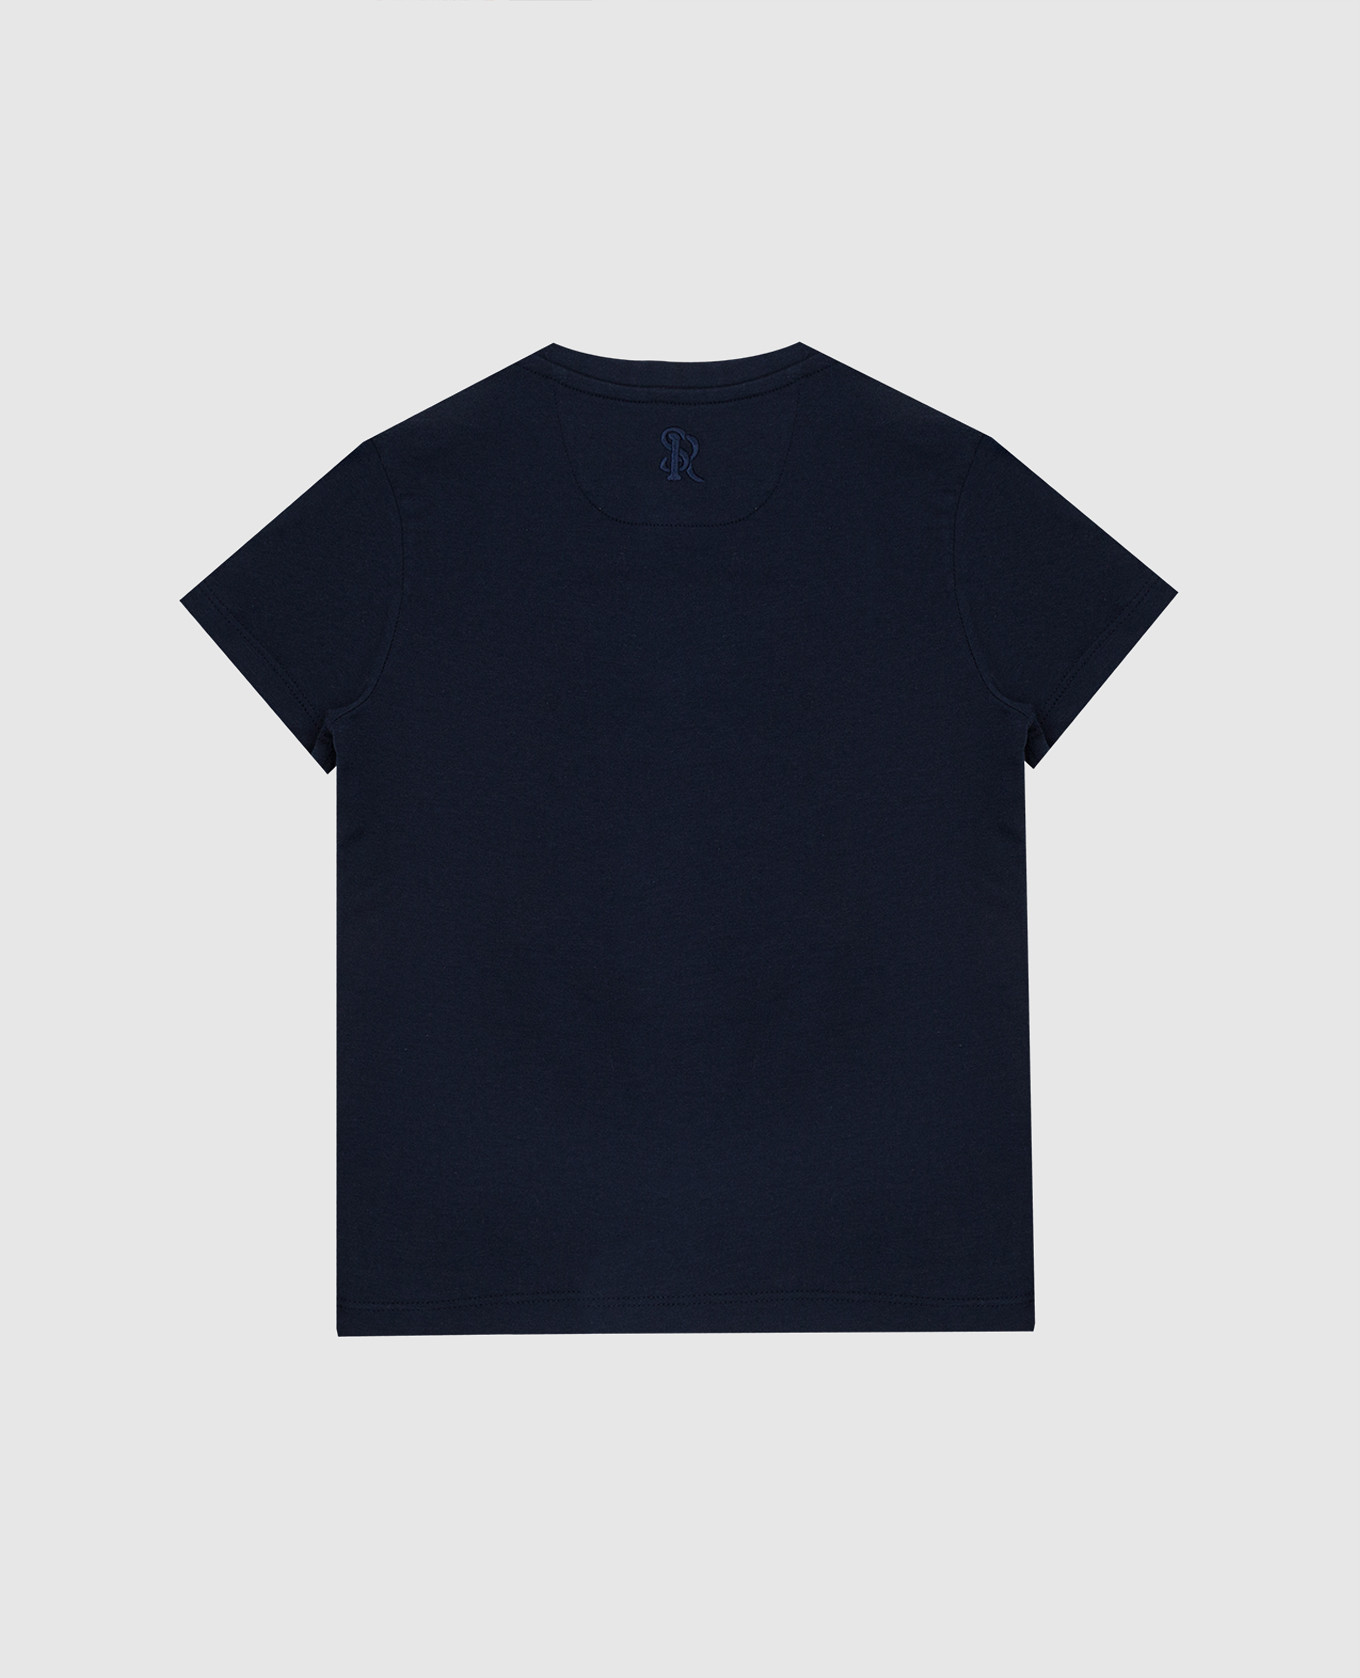 Stefano Ricci Детская темно-синяя футболка с вышивкой YNH9200050803 изображение 2